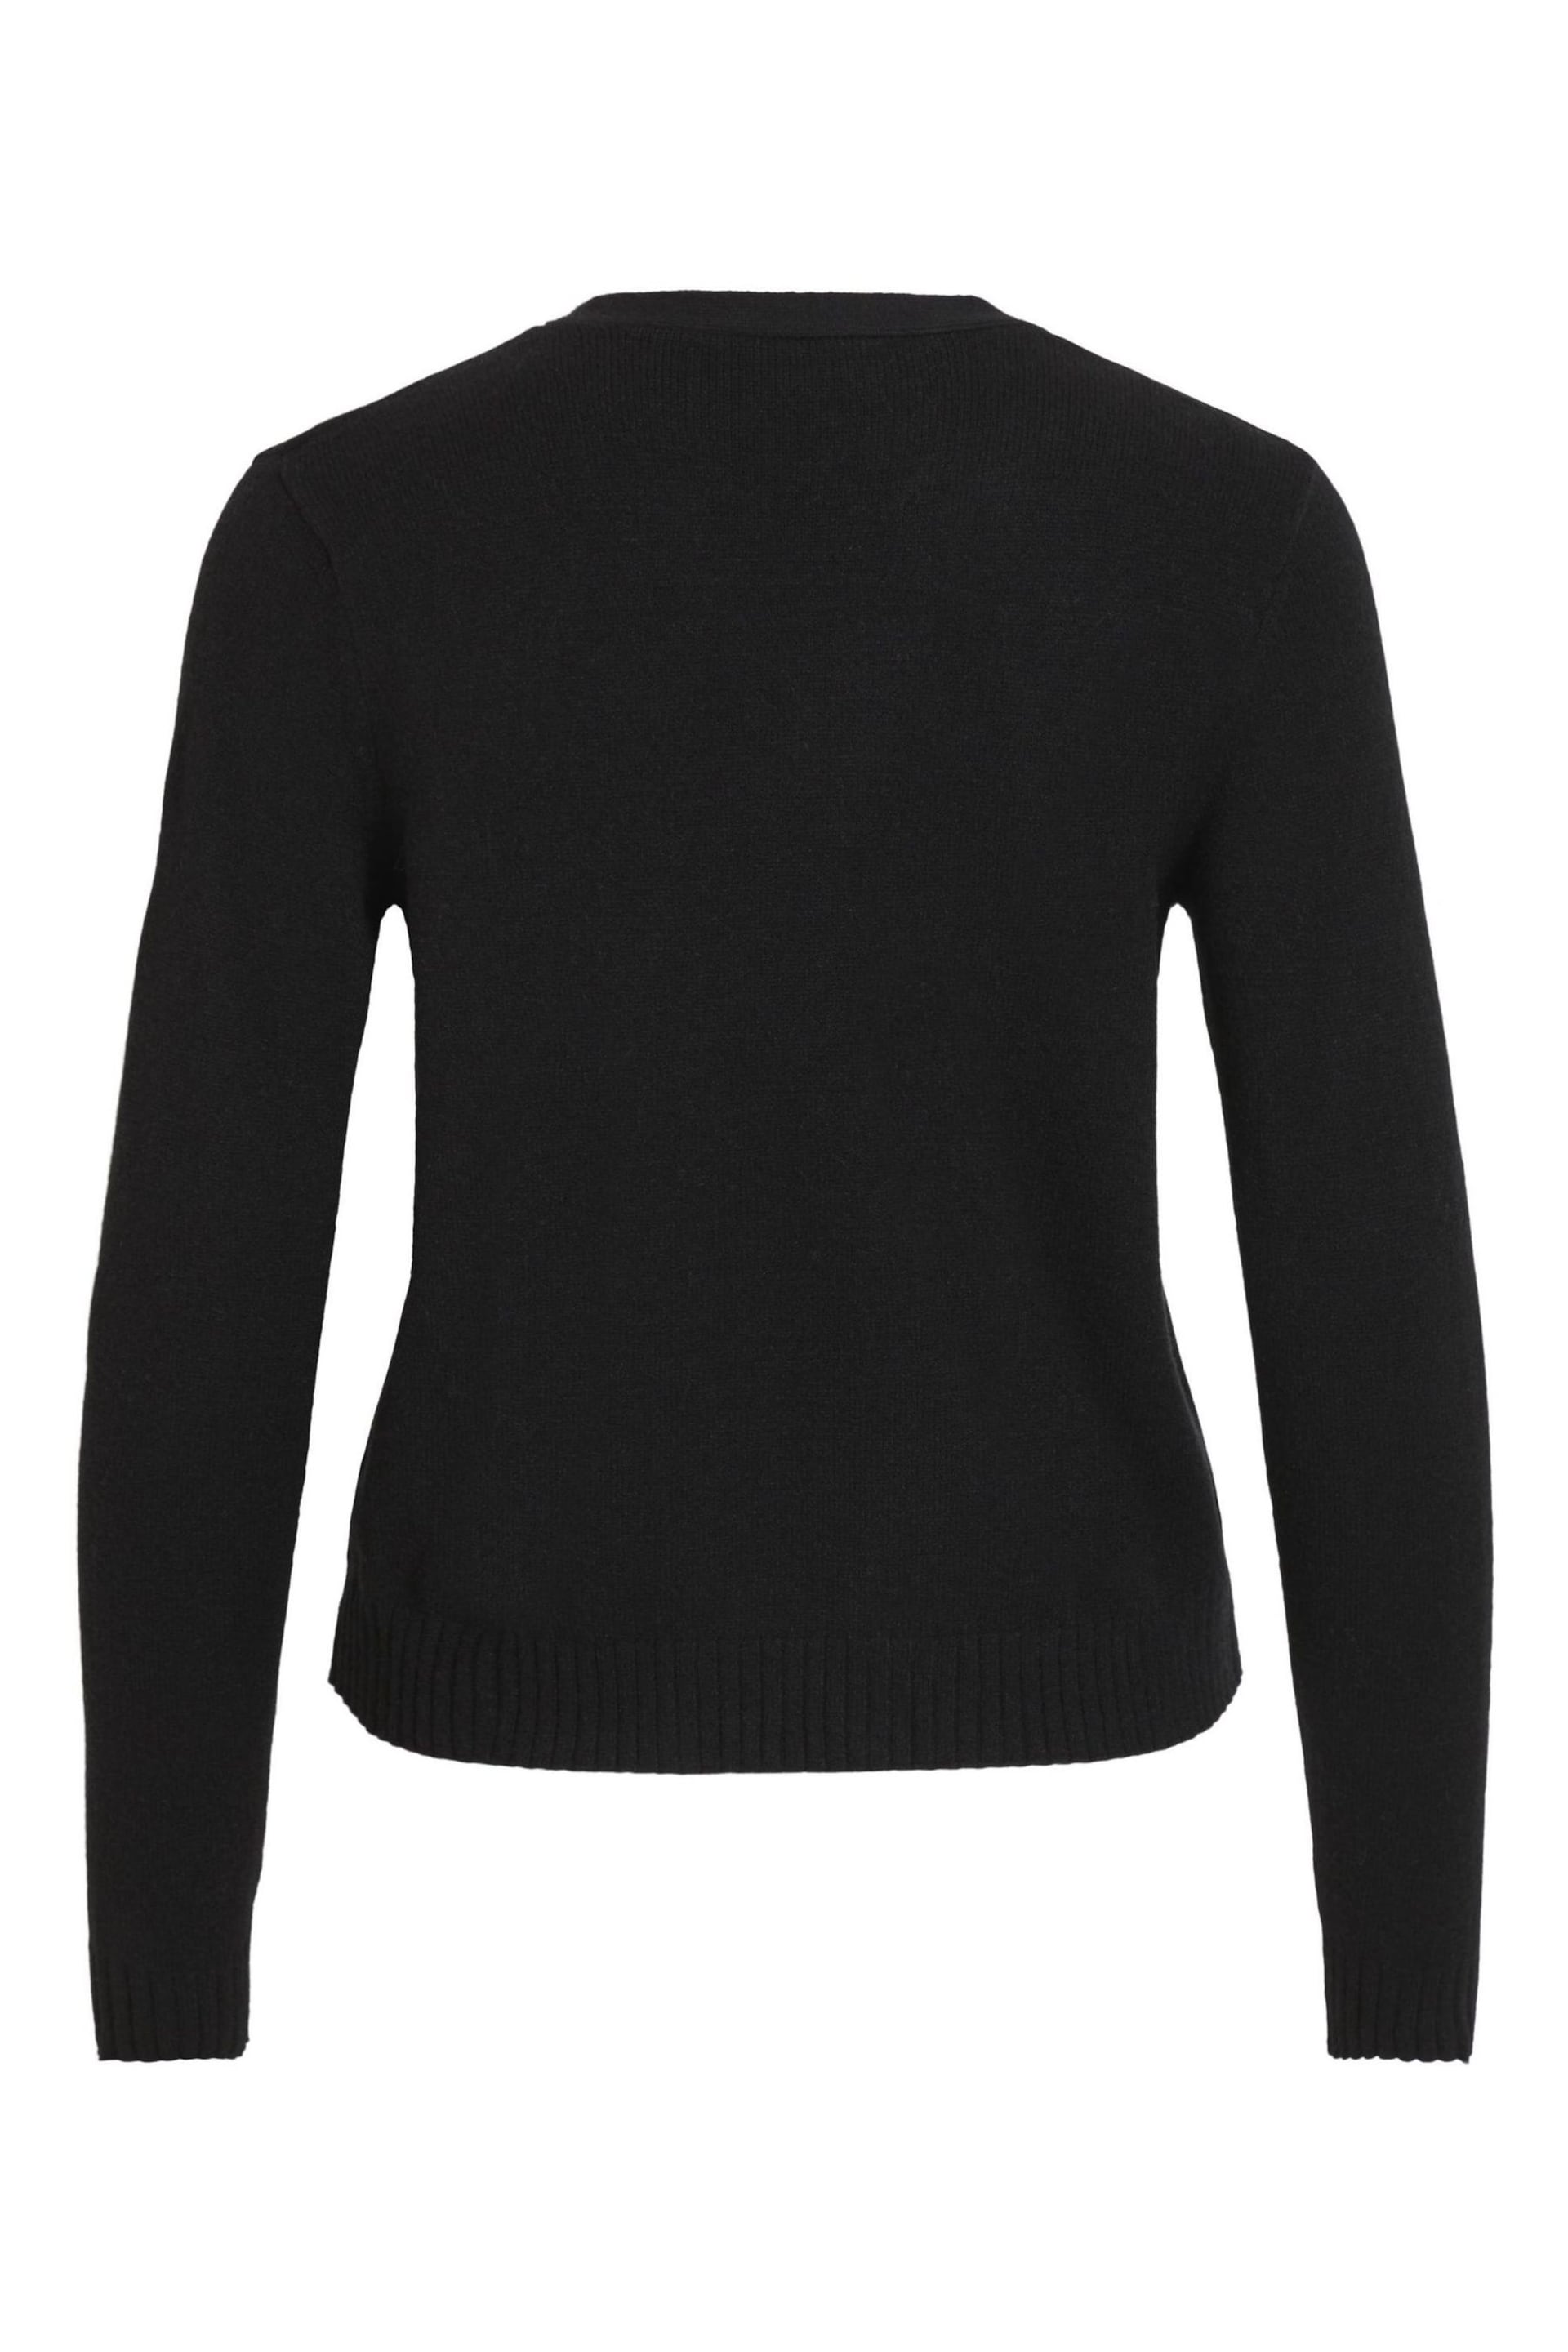 VILA Black Long Sleeve Cropped Cardigan - Image 4 of 4